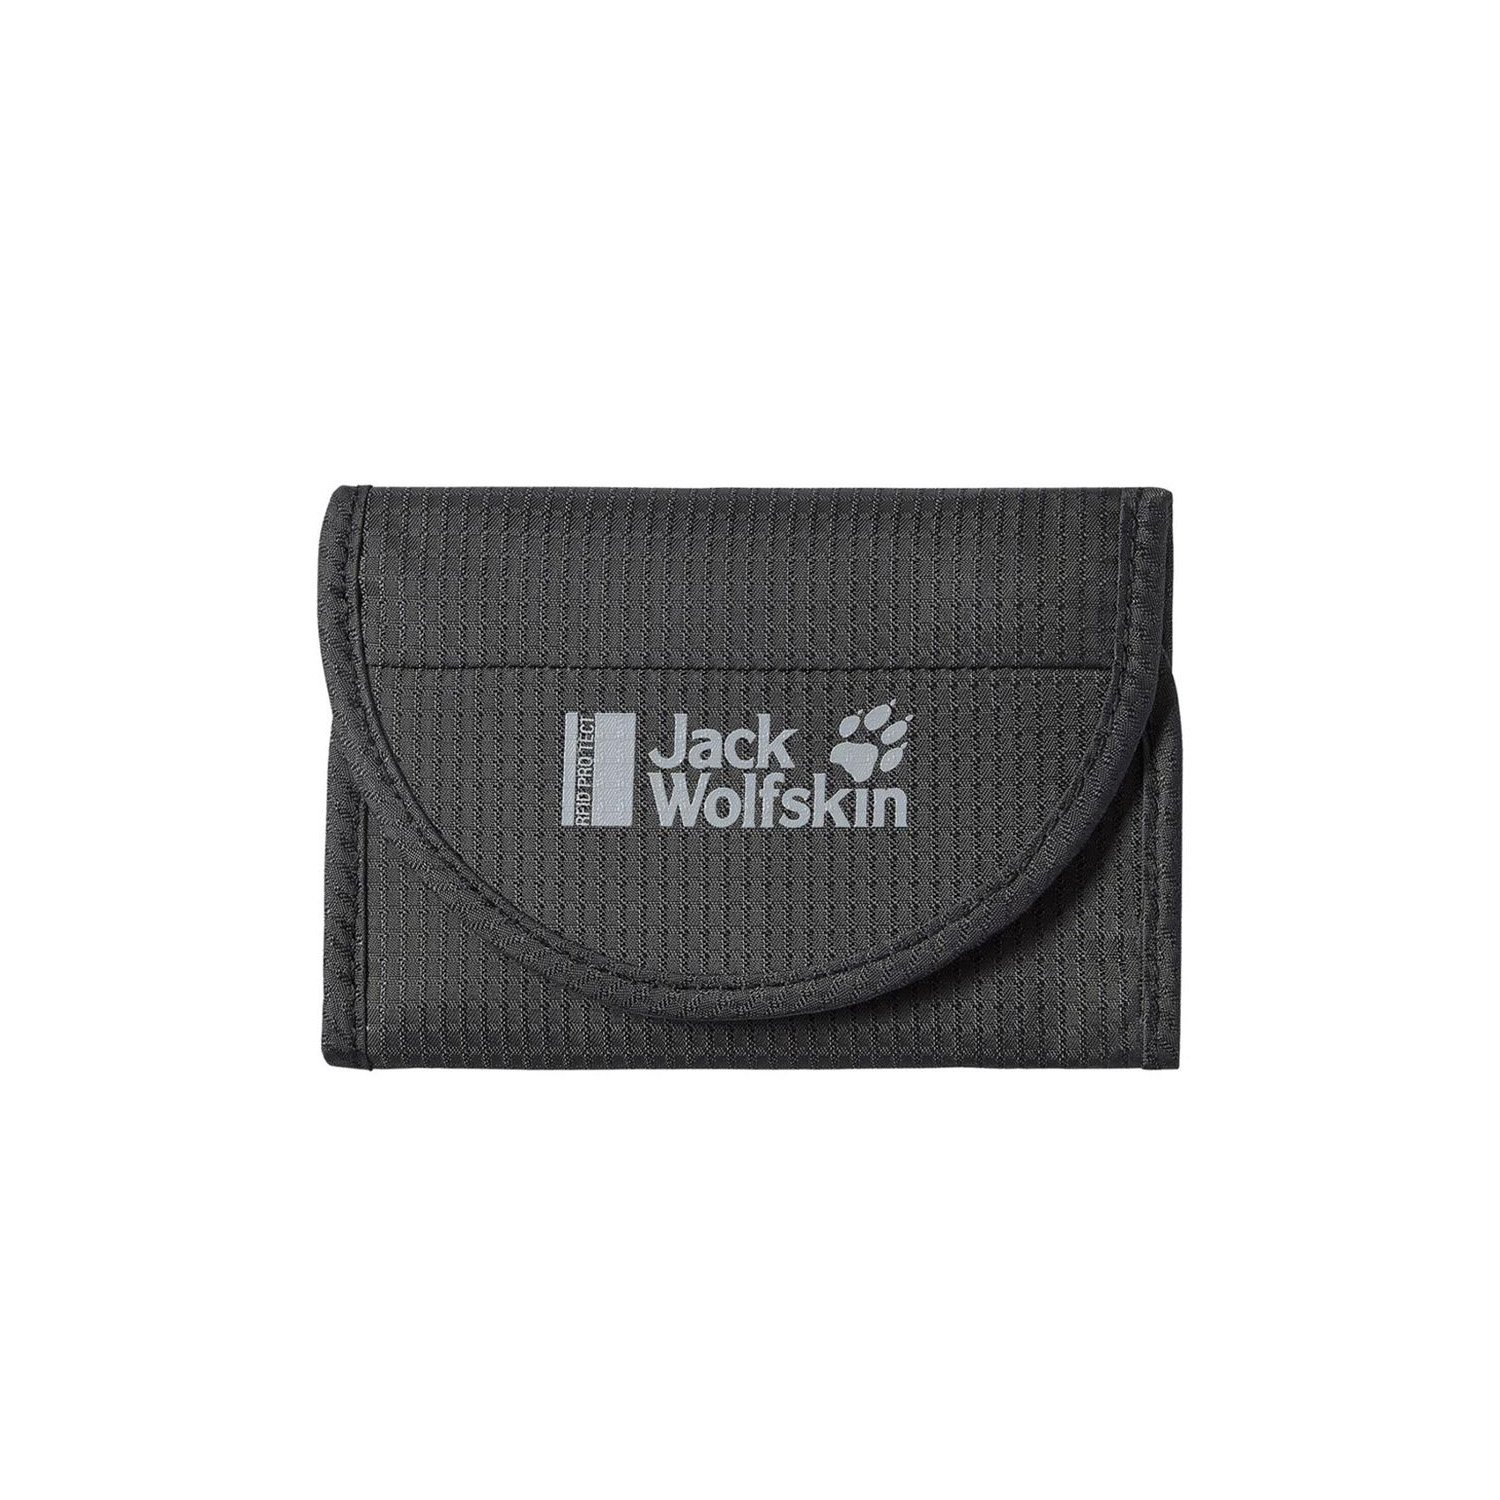 Jack Wolfskin Cashbag Cüzdan - Antrasit - 1